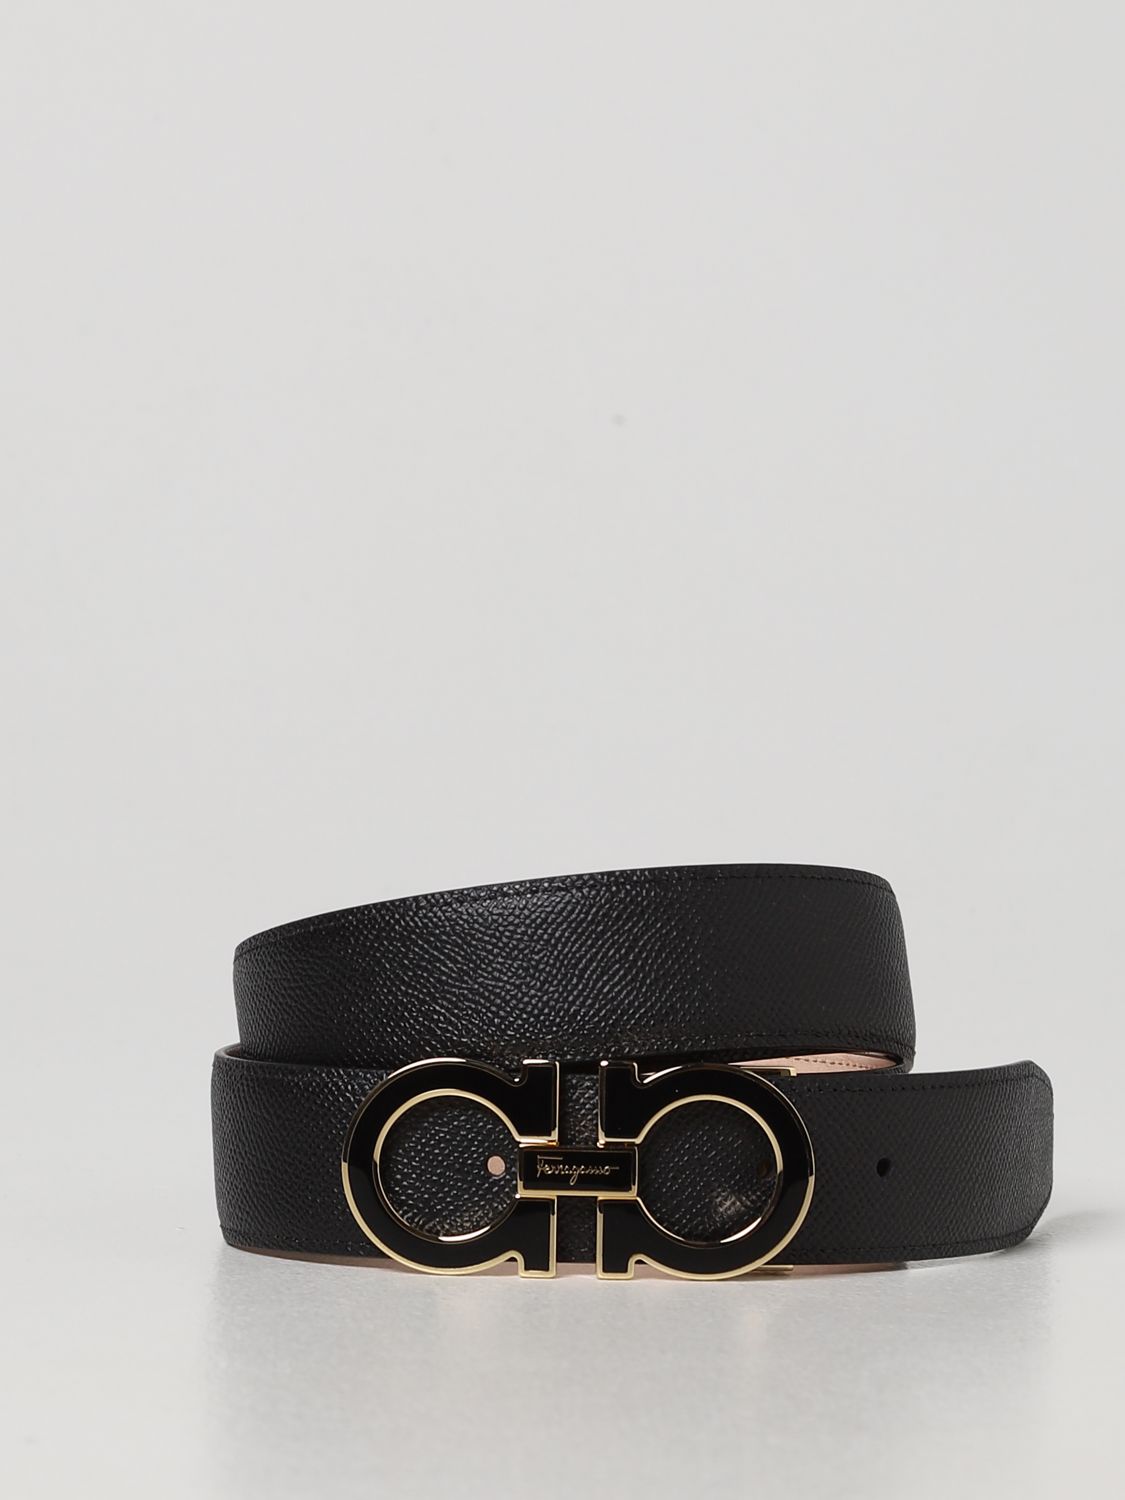 FERRAGAMO: Salvatore grained leather belt - Black | Ferragamo belt ...